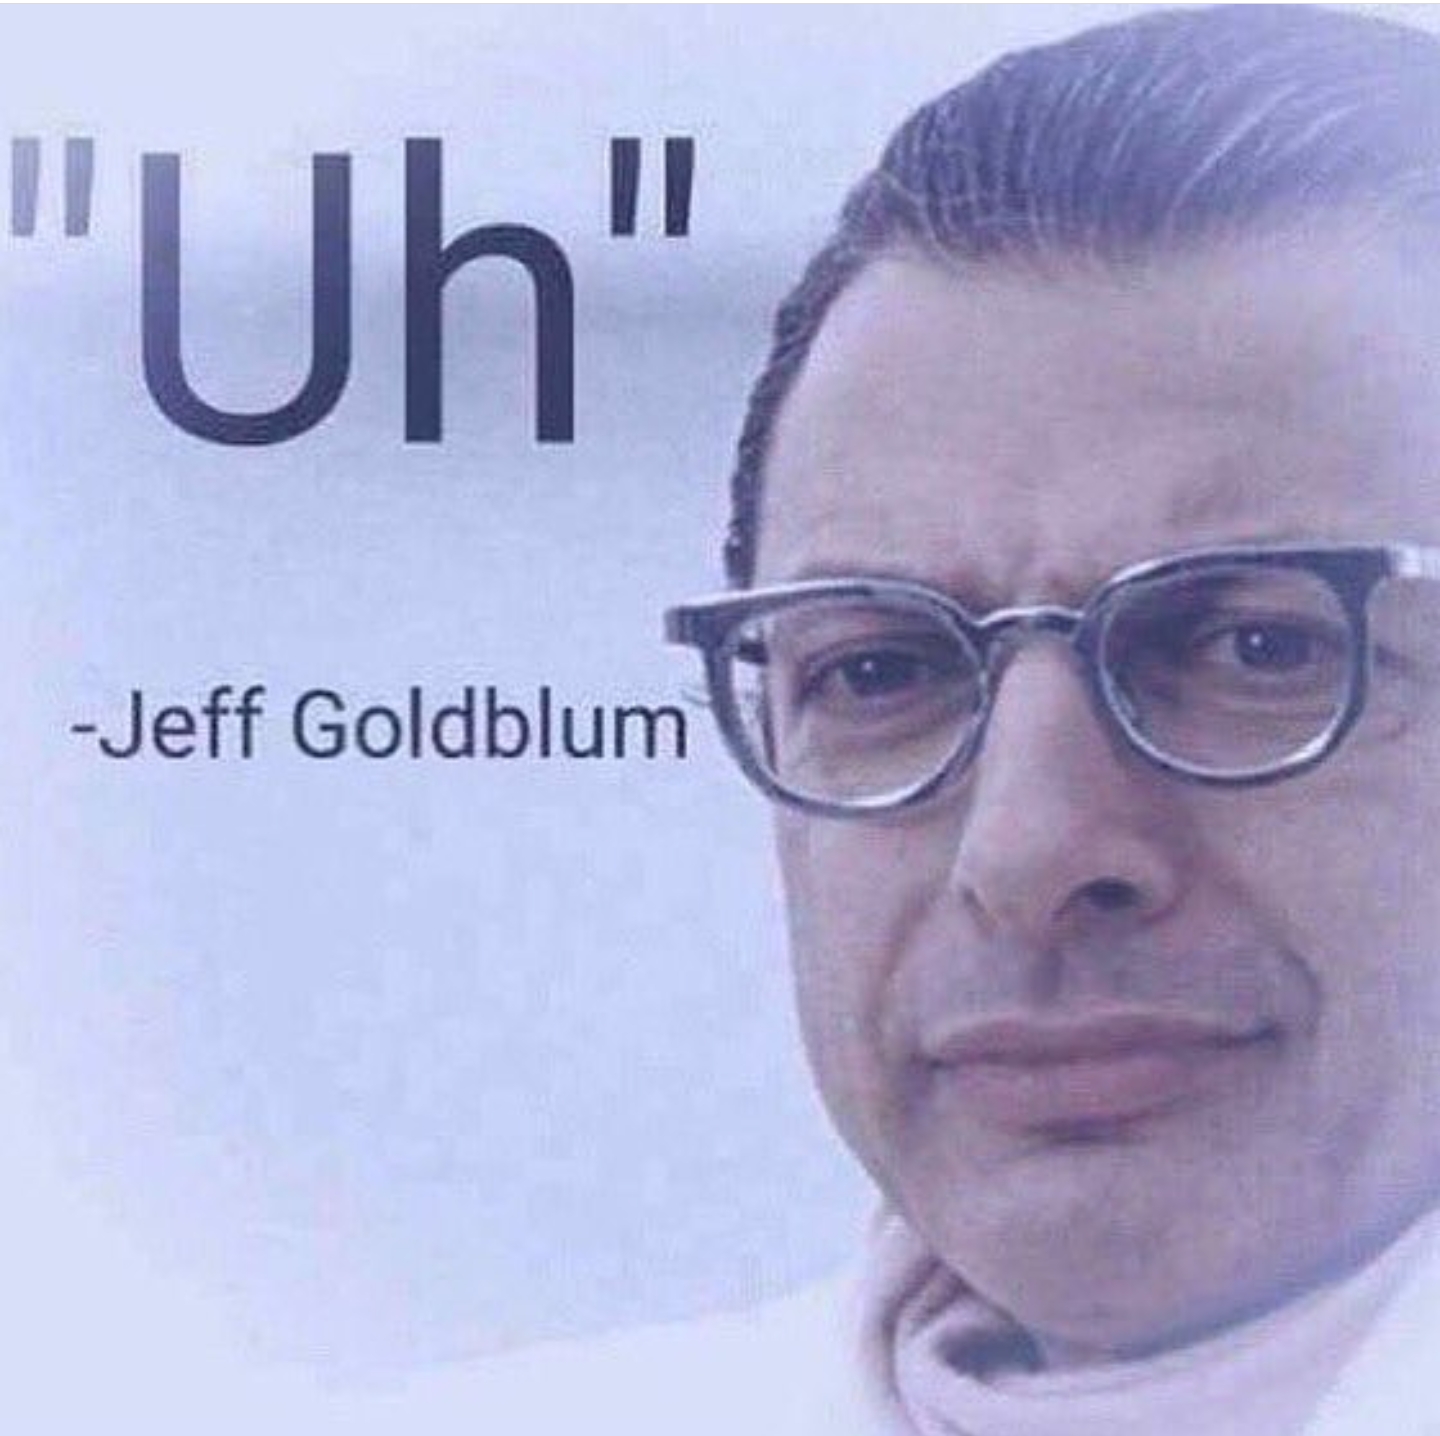 jeff goldblum reaction - "Uh" Jeff Goldblum